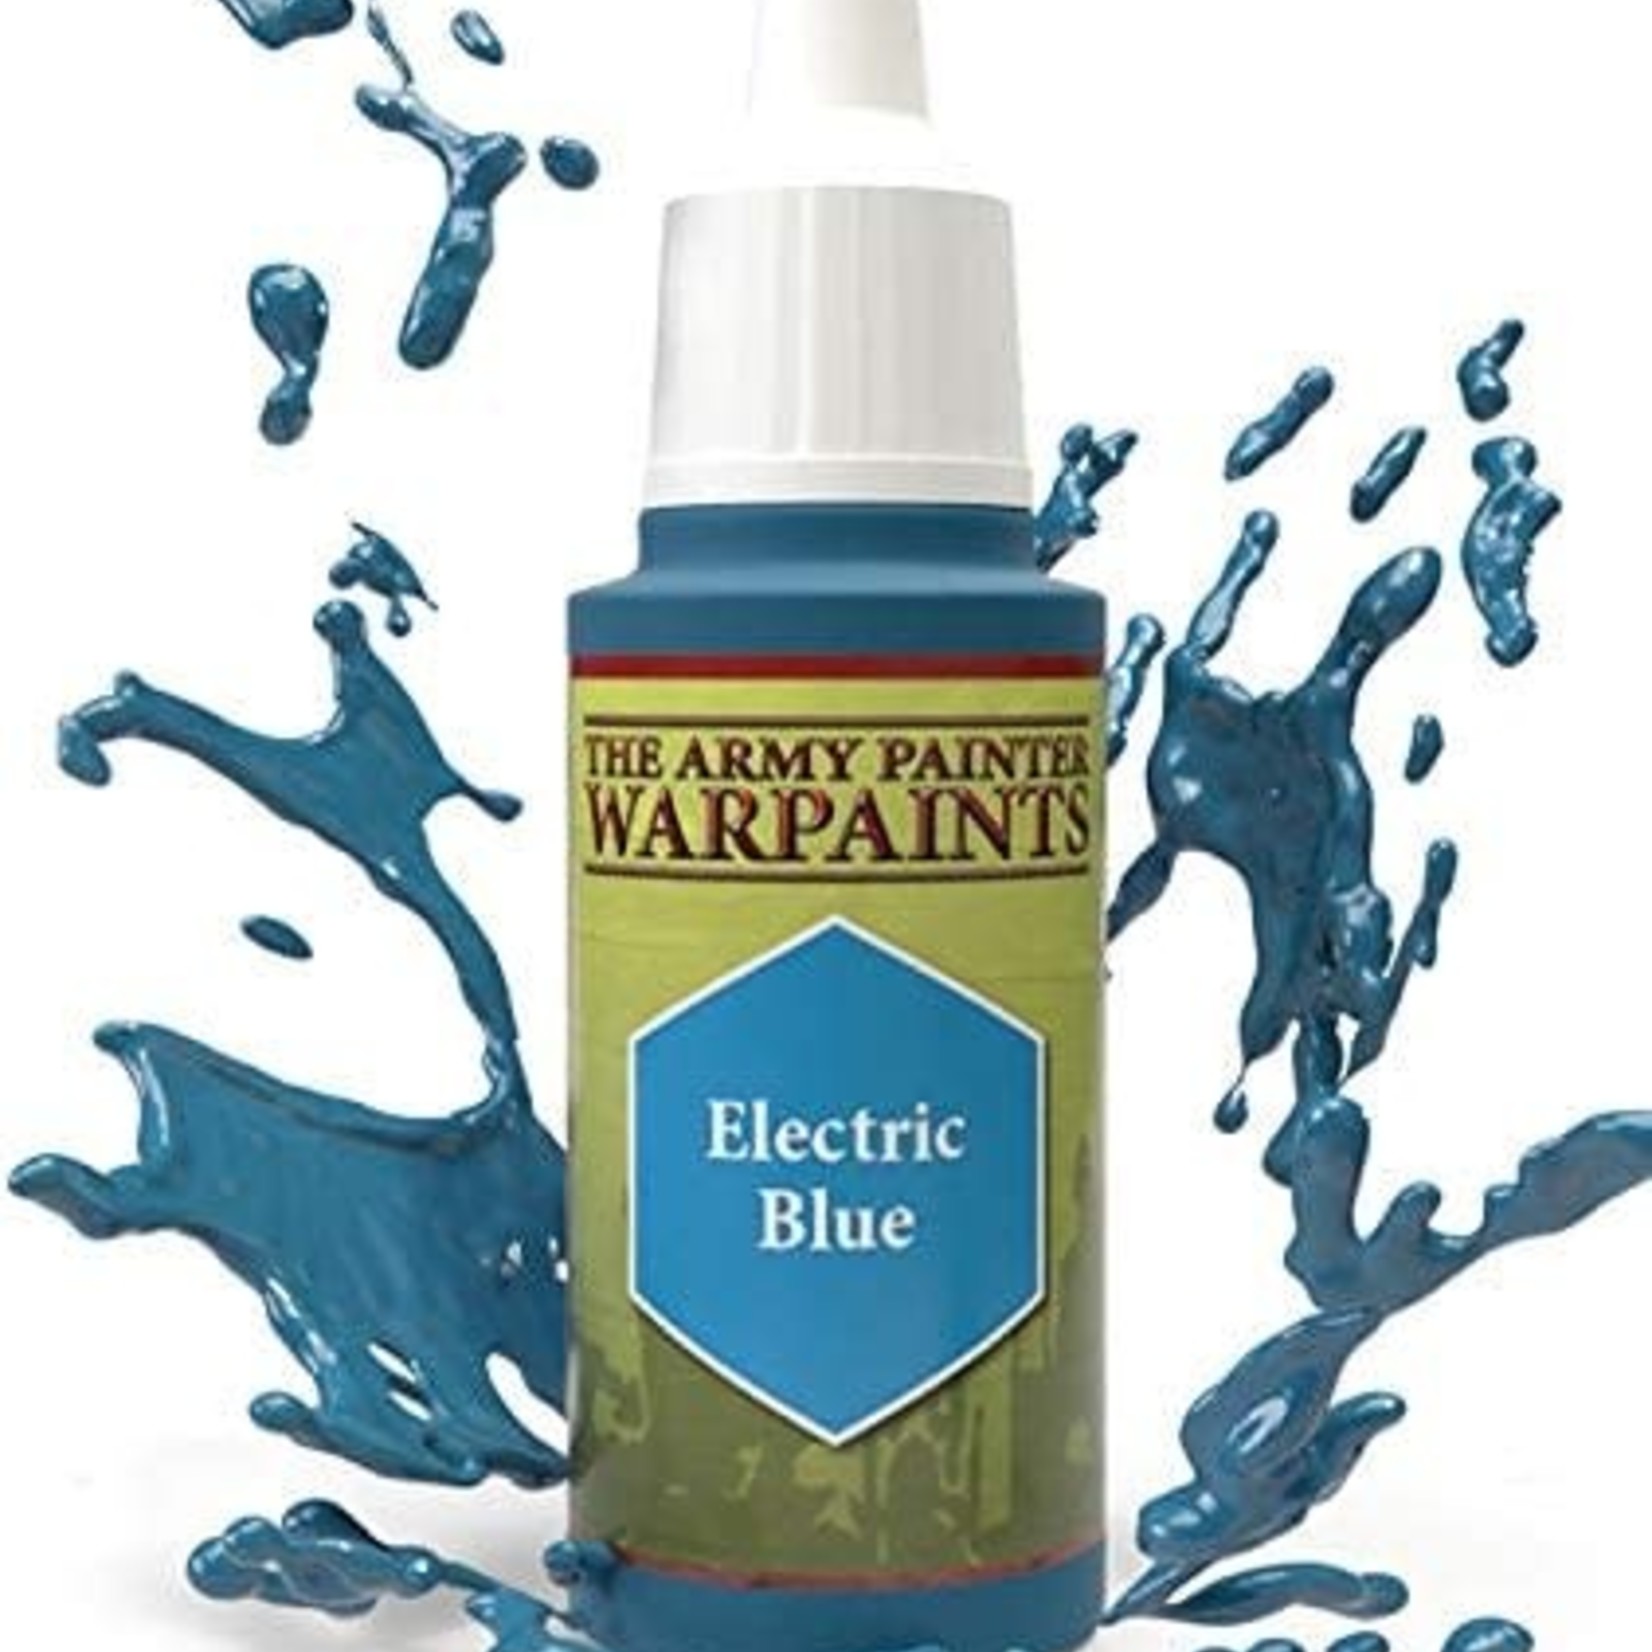 Army Painter Army Painter Warpaints Electric Blue